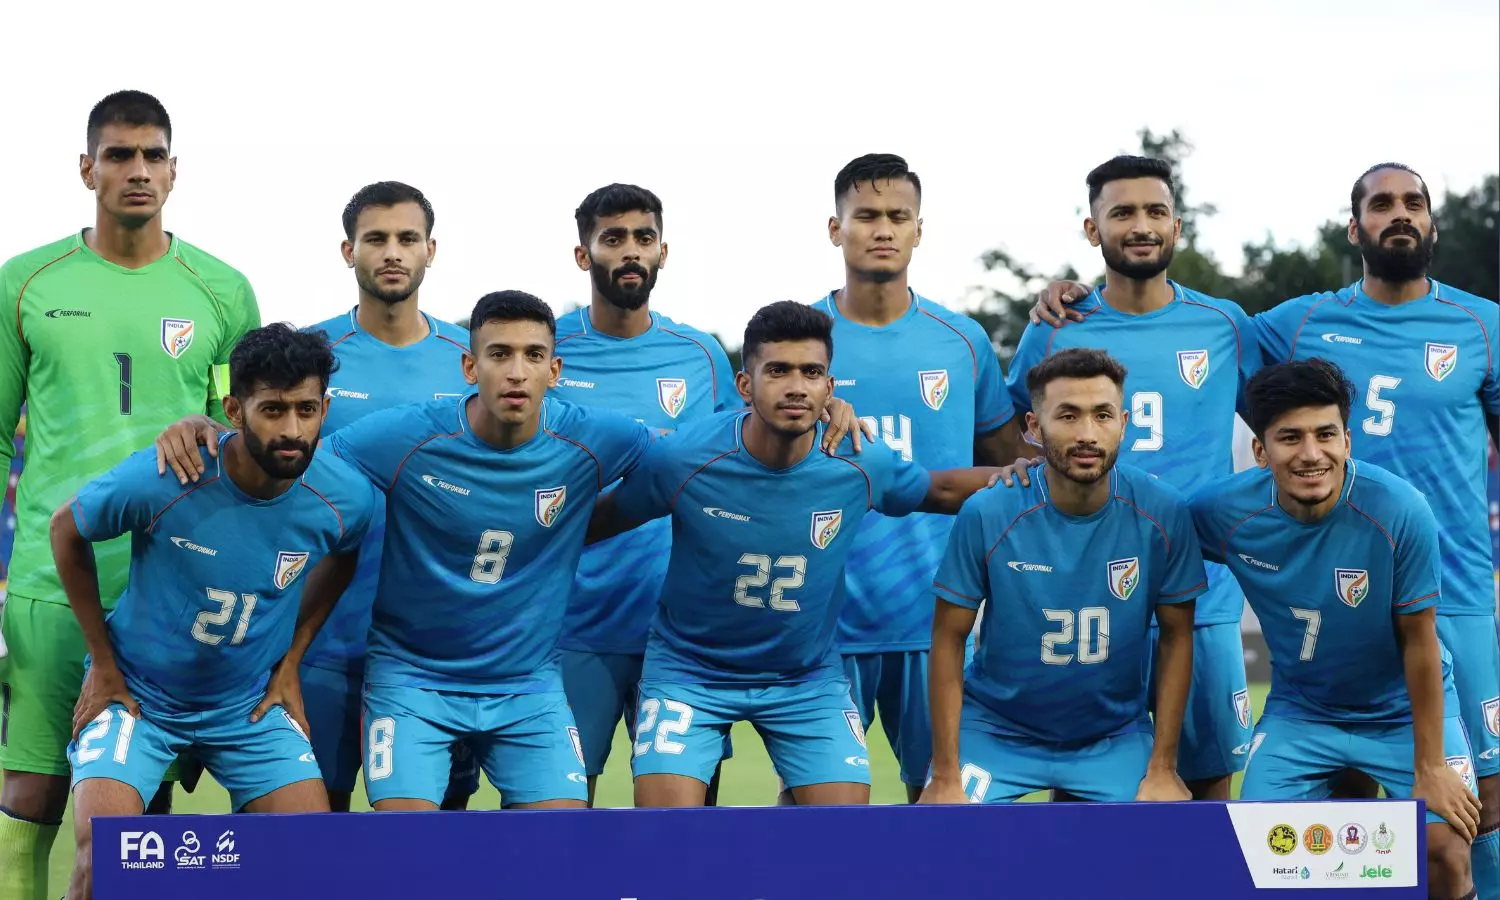 India climbs to 100th rank in latest FIFA Men's football rankings